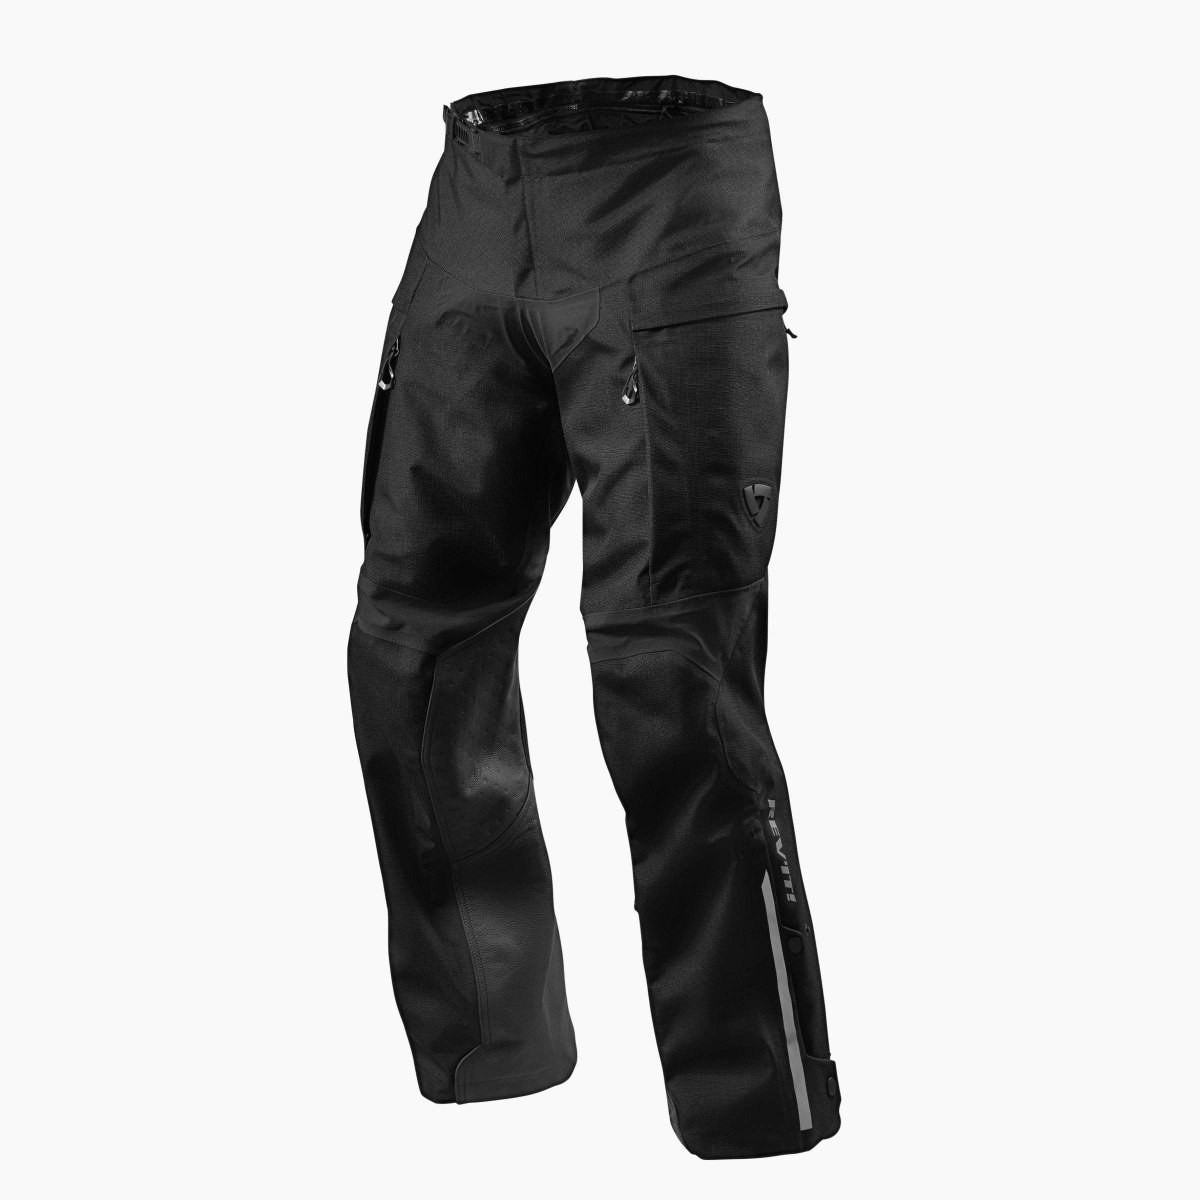 Image of REV'IT! Component H2O Short Black Motorcycle Pants Size 2XL EN